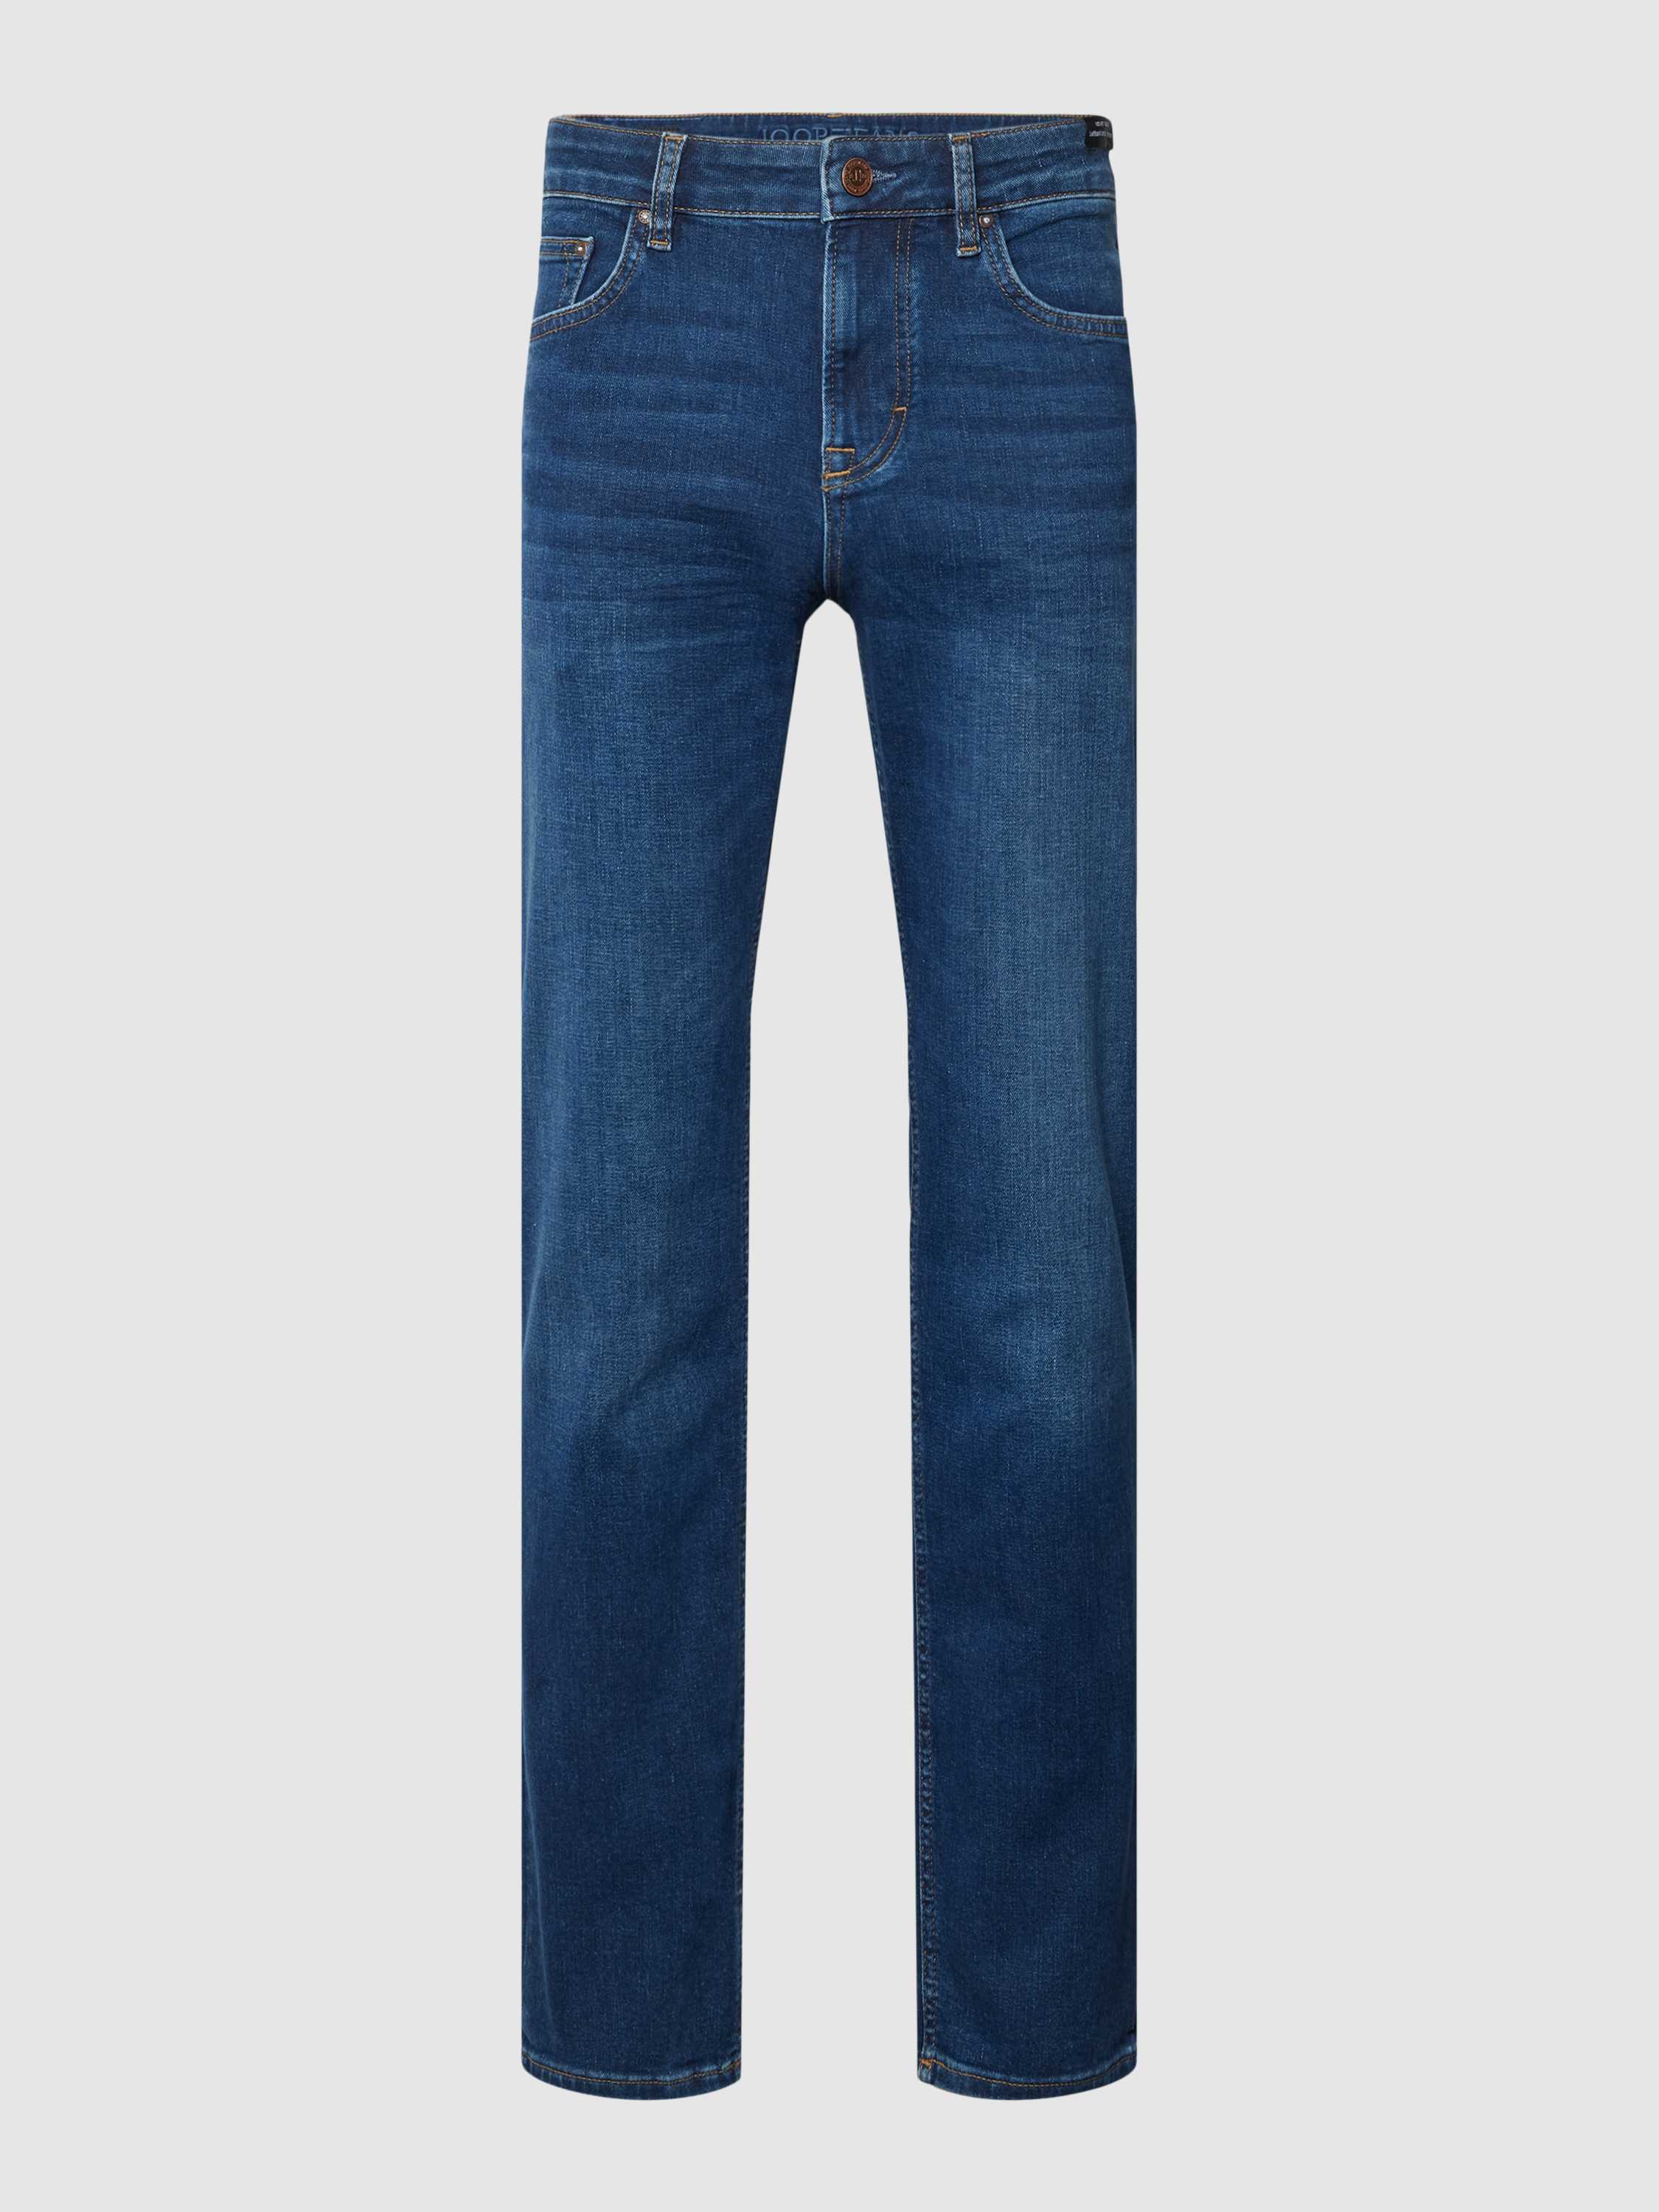 Jeans im 5-Pocket-Design Modell 'Mitch'